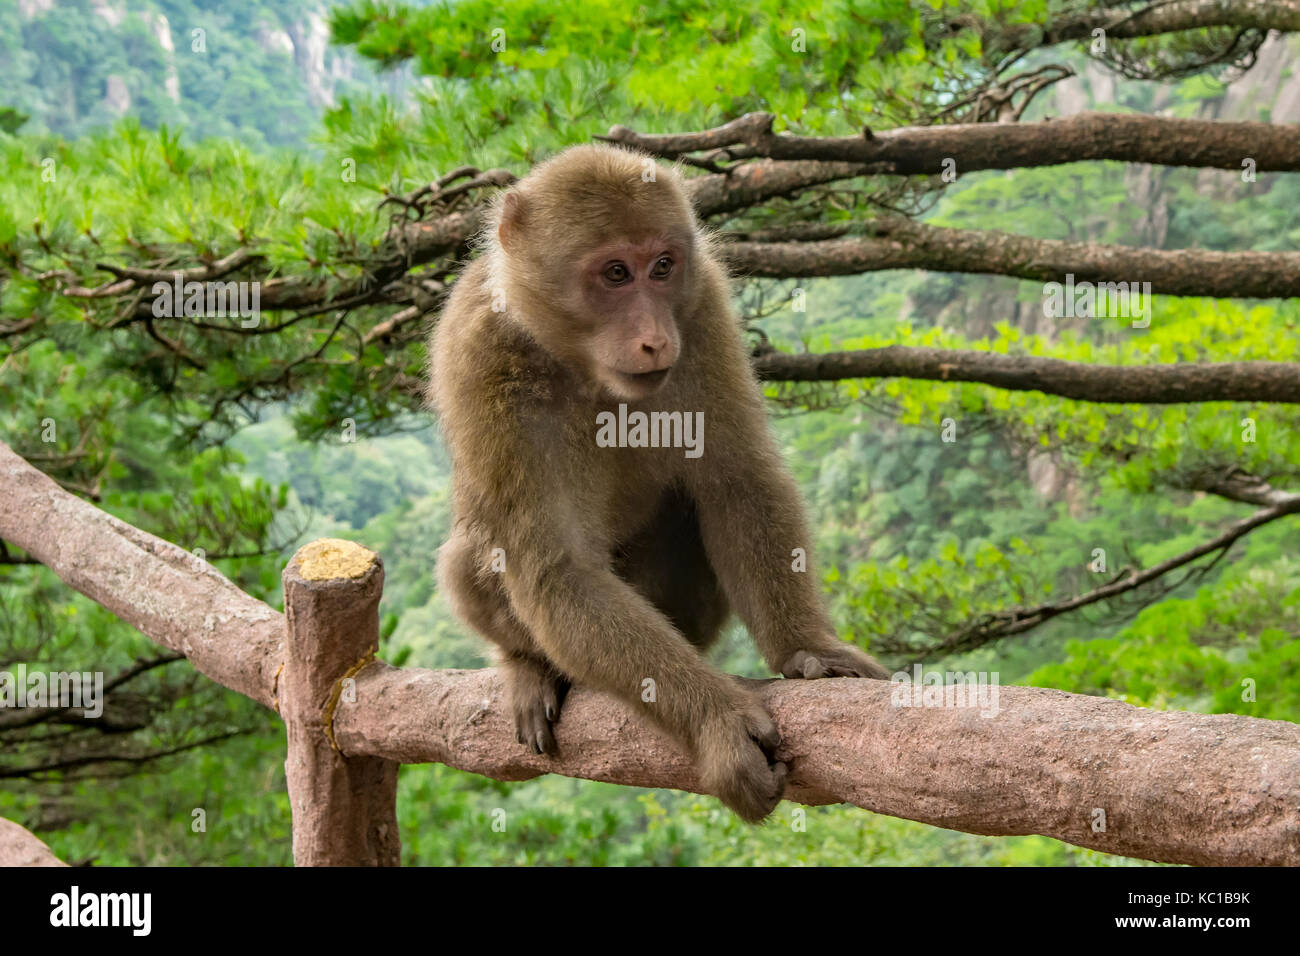 Mono de fotografías e imágenes de alta resolución Alamy